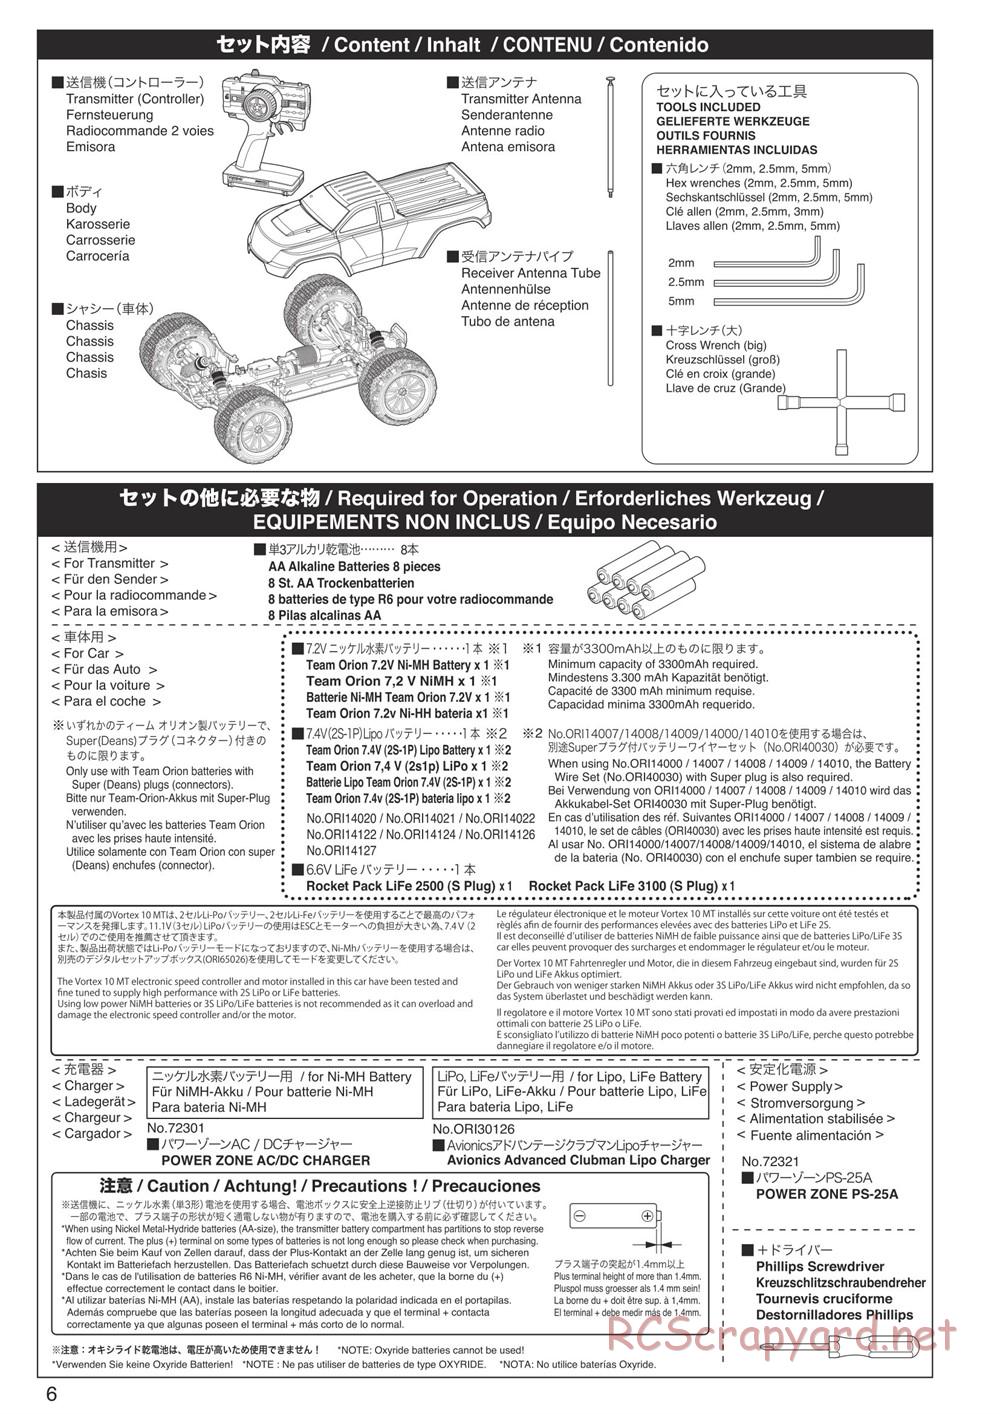 Kyosho - DMT-VE - Manual - Page 6